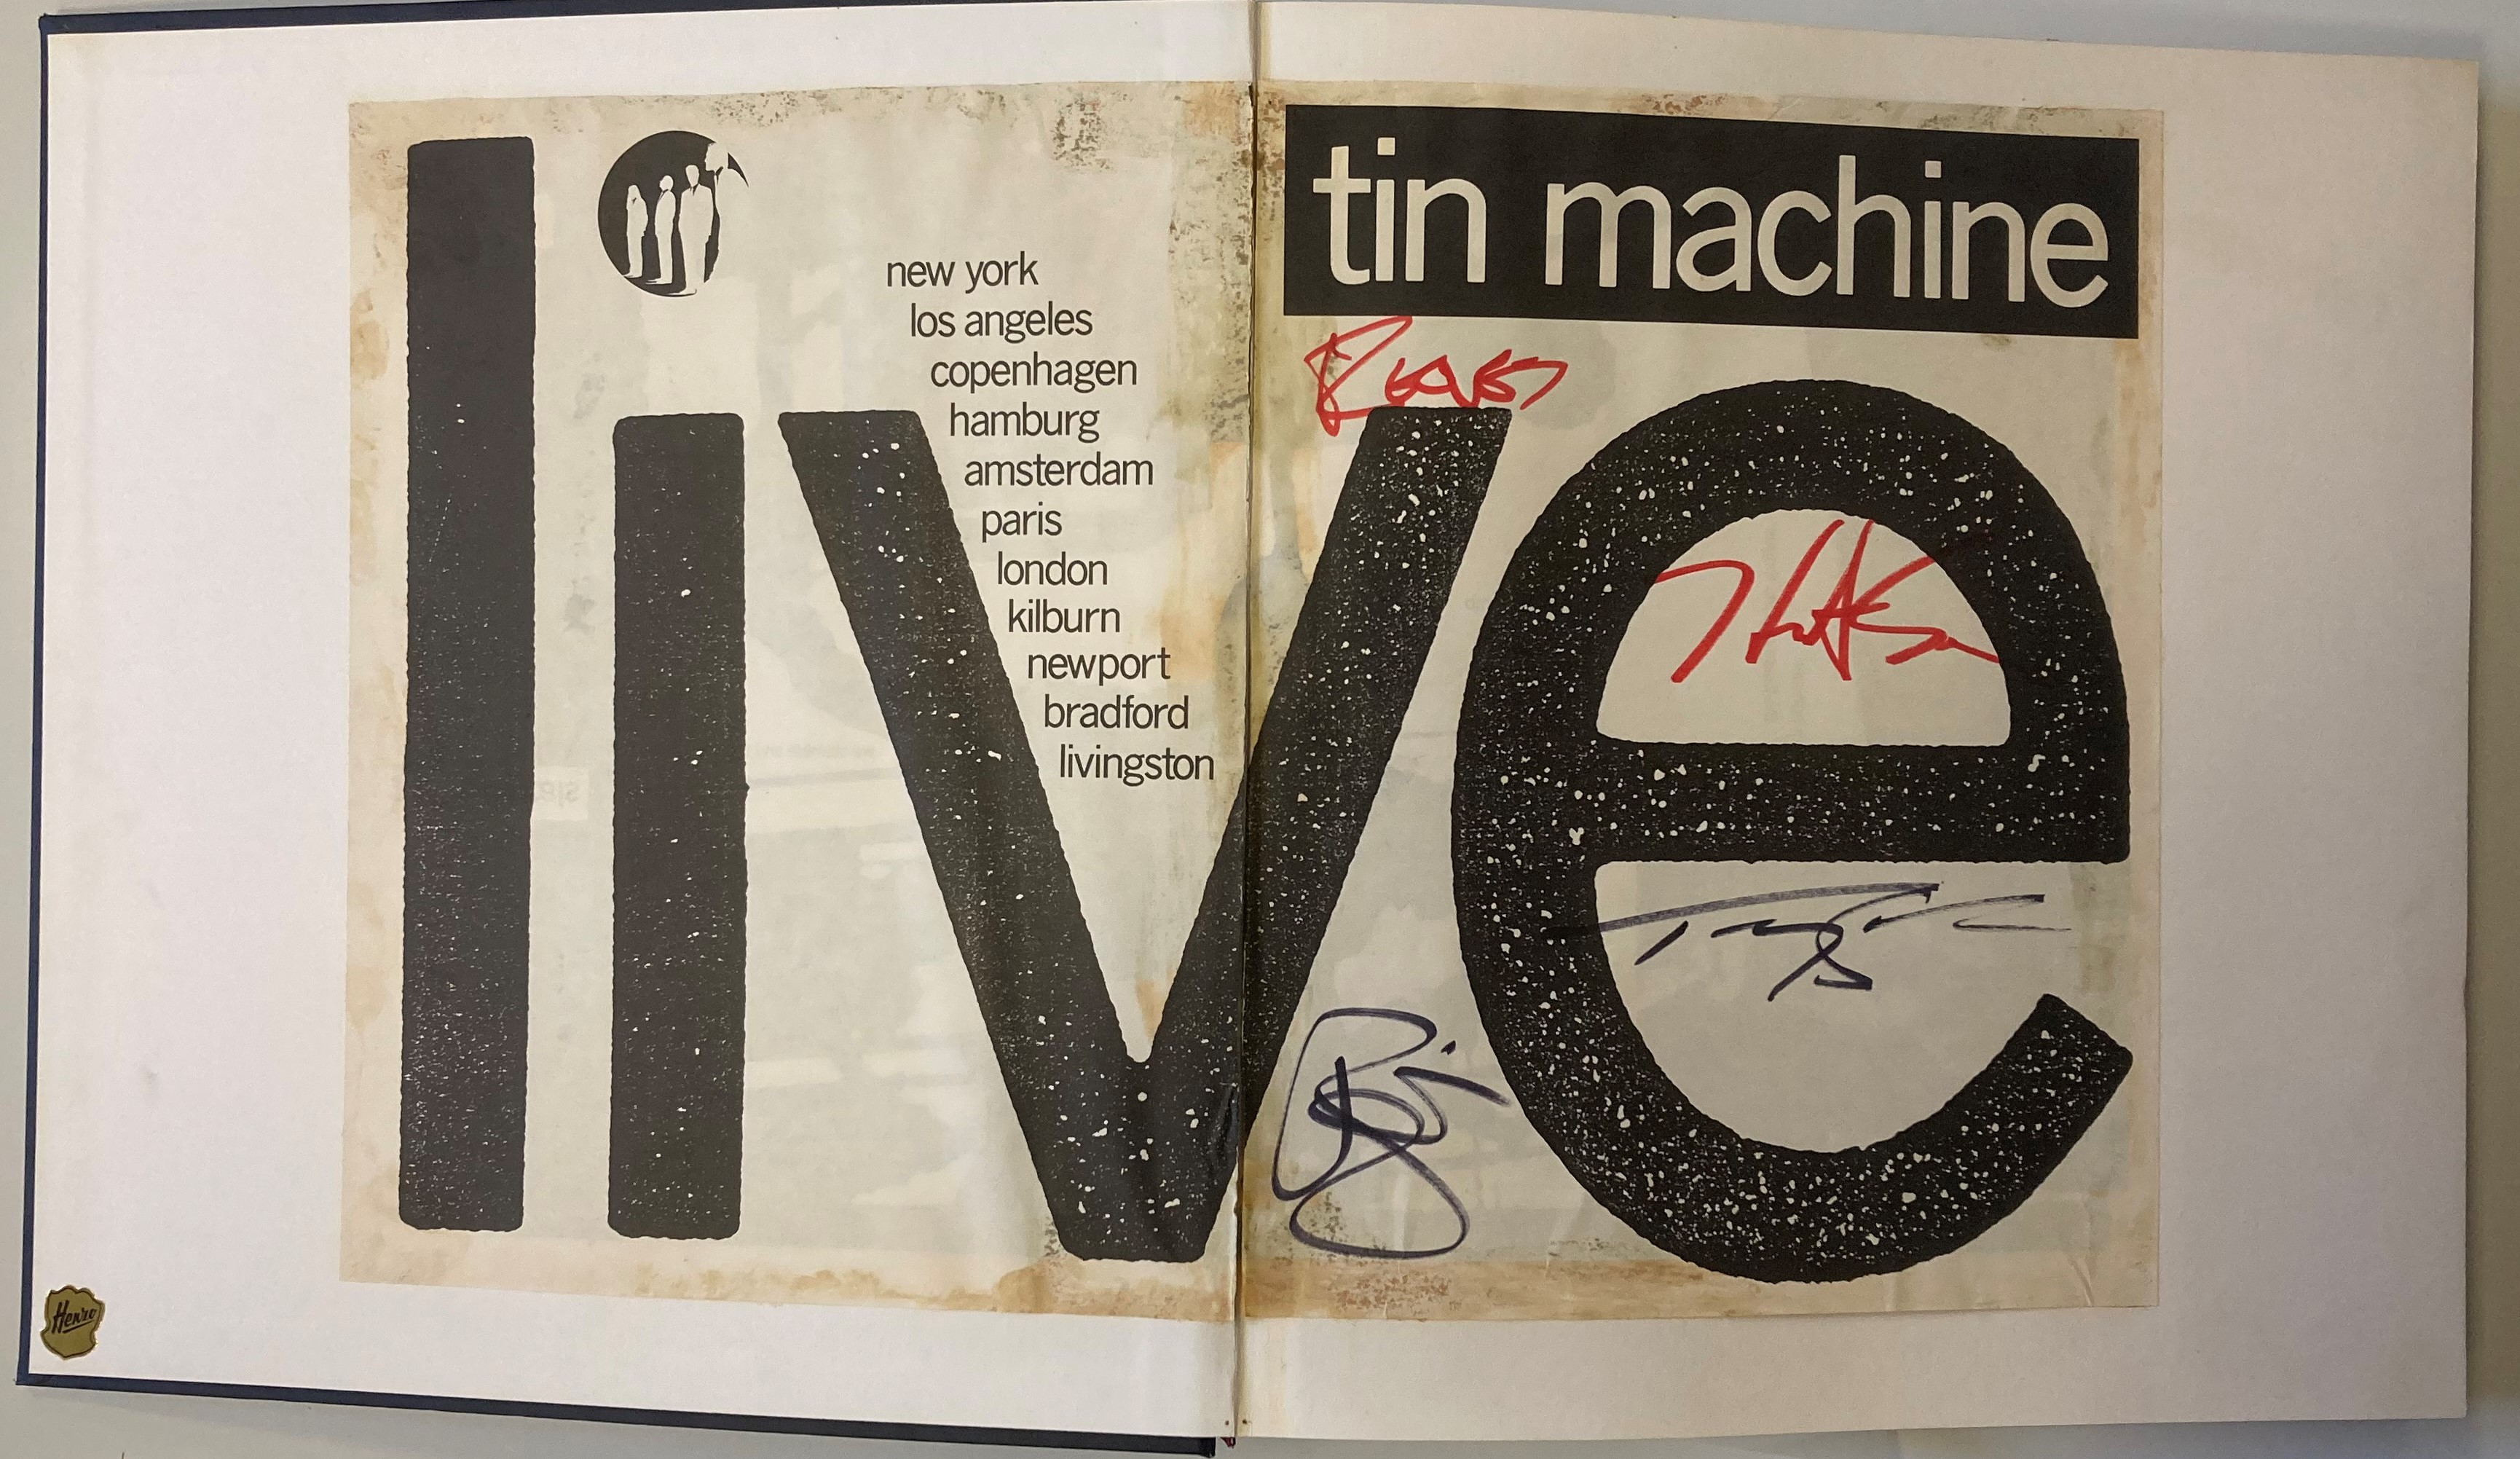 David Bowie \u0026 Tin Machine 1989 ツアーパンフレットメンバー全員の直筆サイン入り